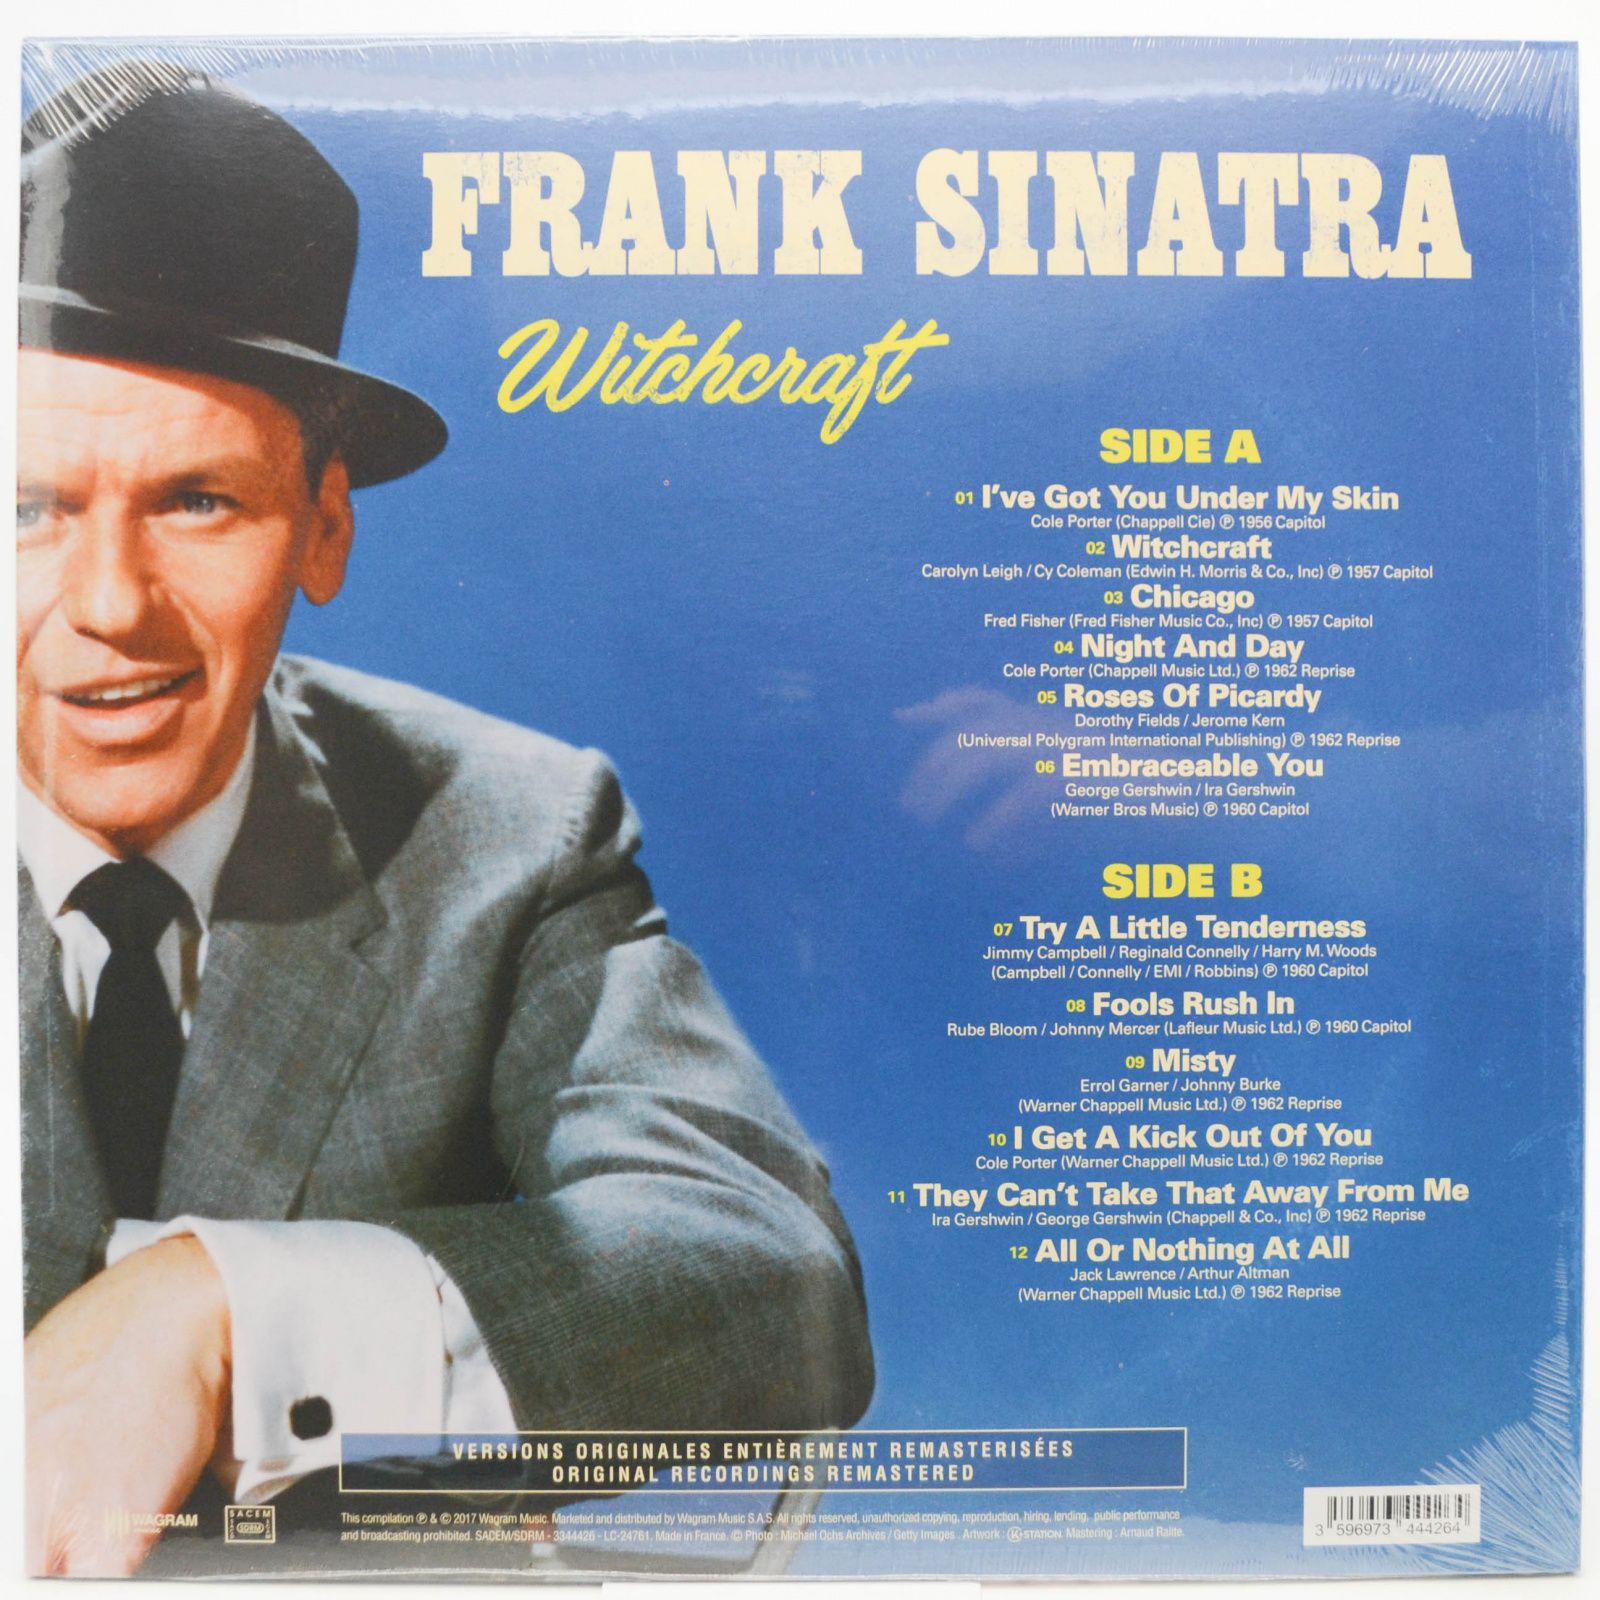 Frank Sinatra — Witchcraft, 1957